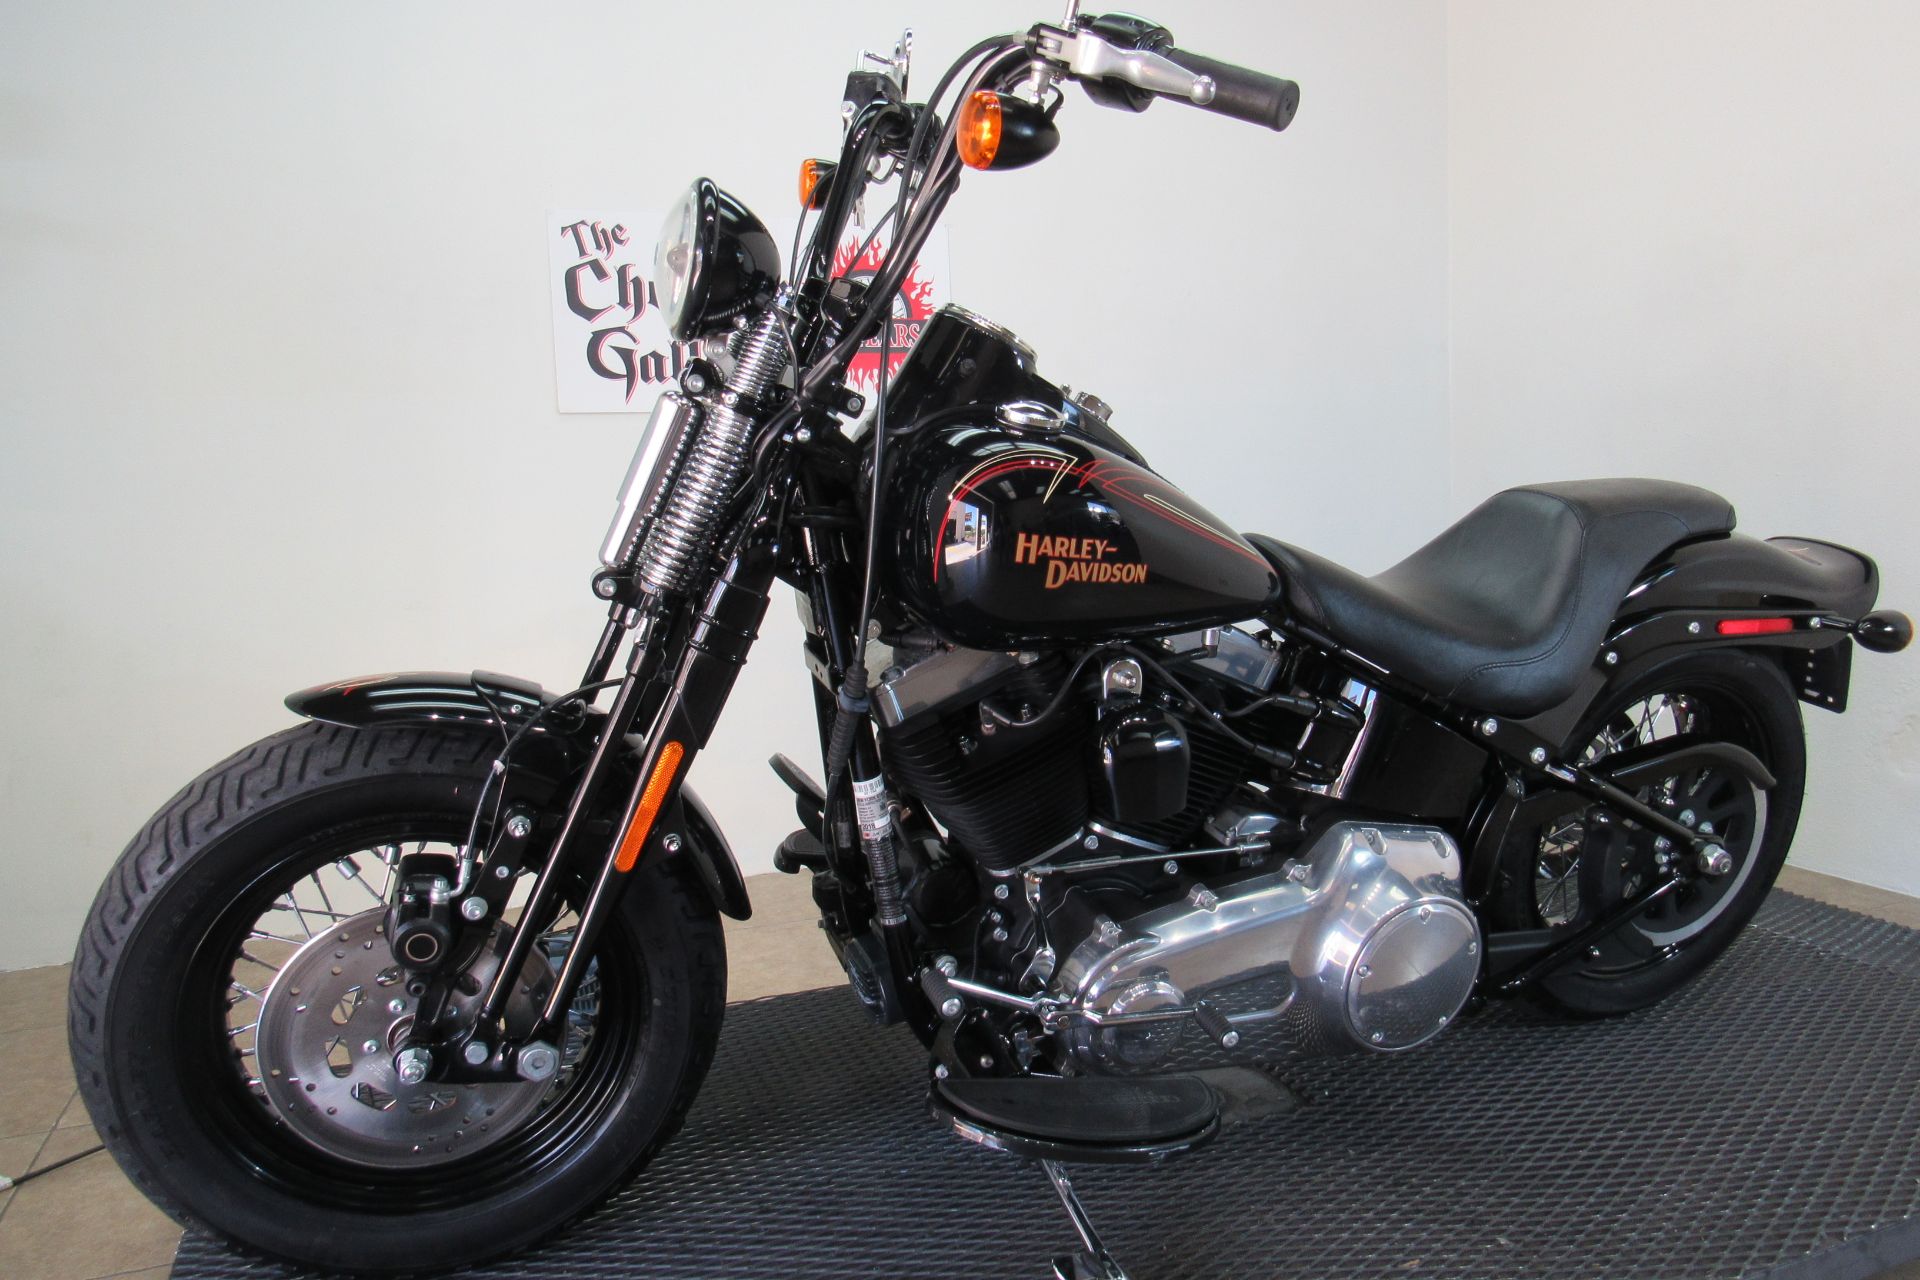 2008 Harley-Davidson Softail® Cross Bones™ in Temecula, California - Photo 8